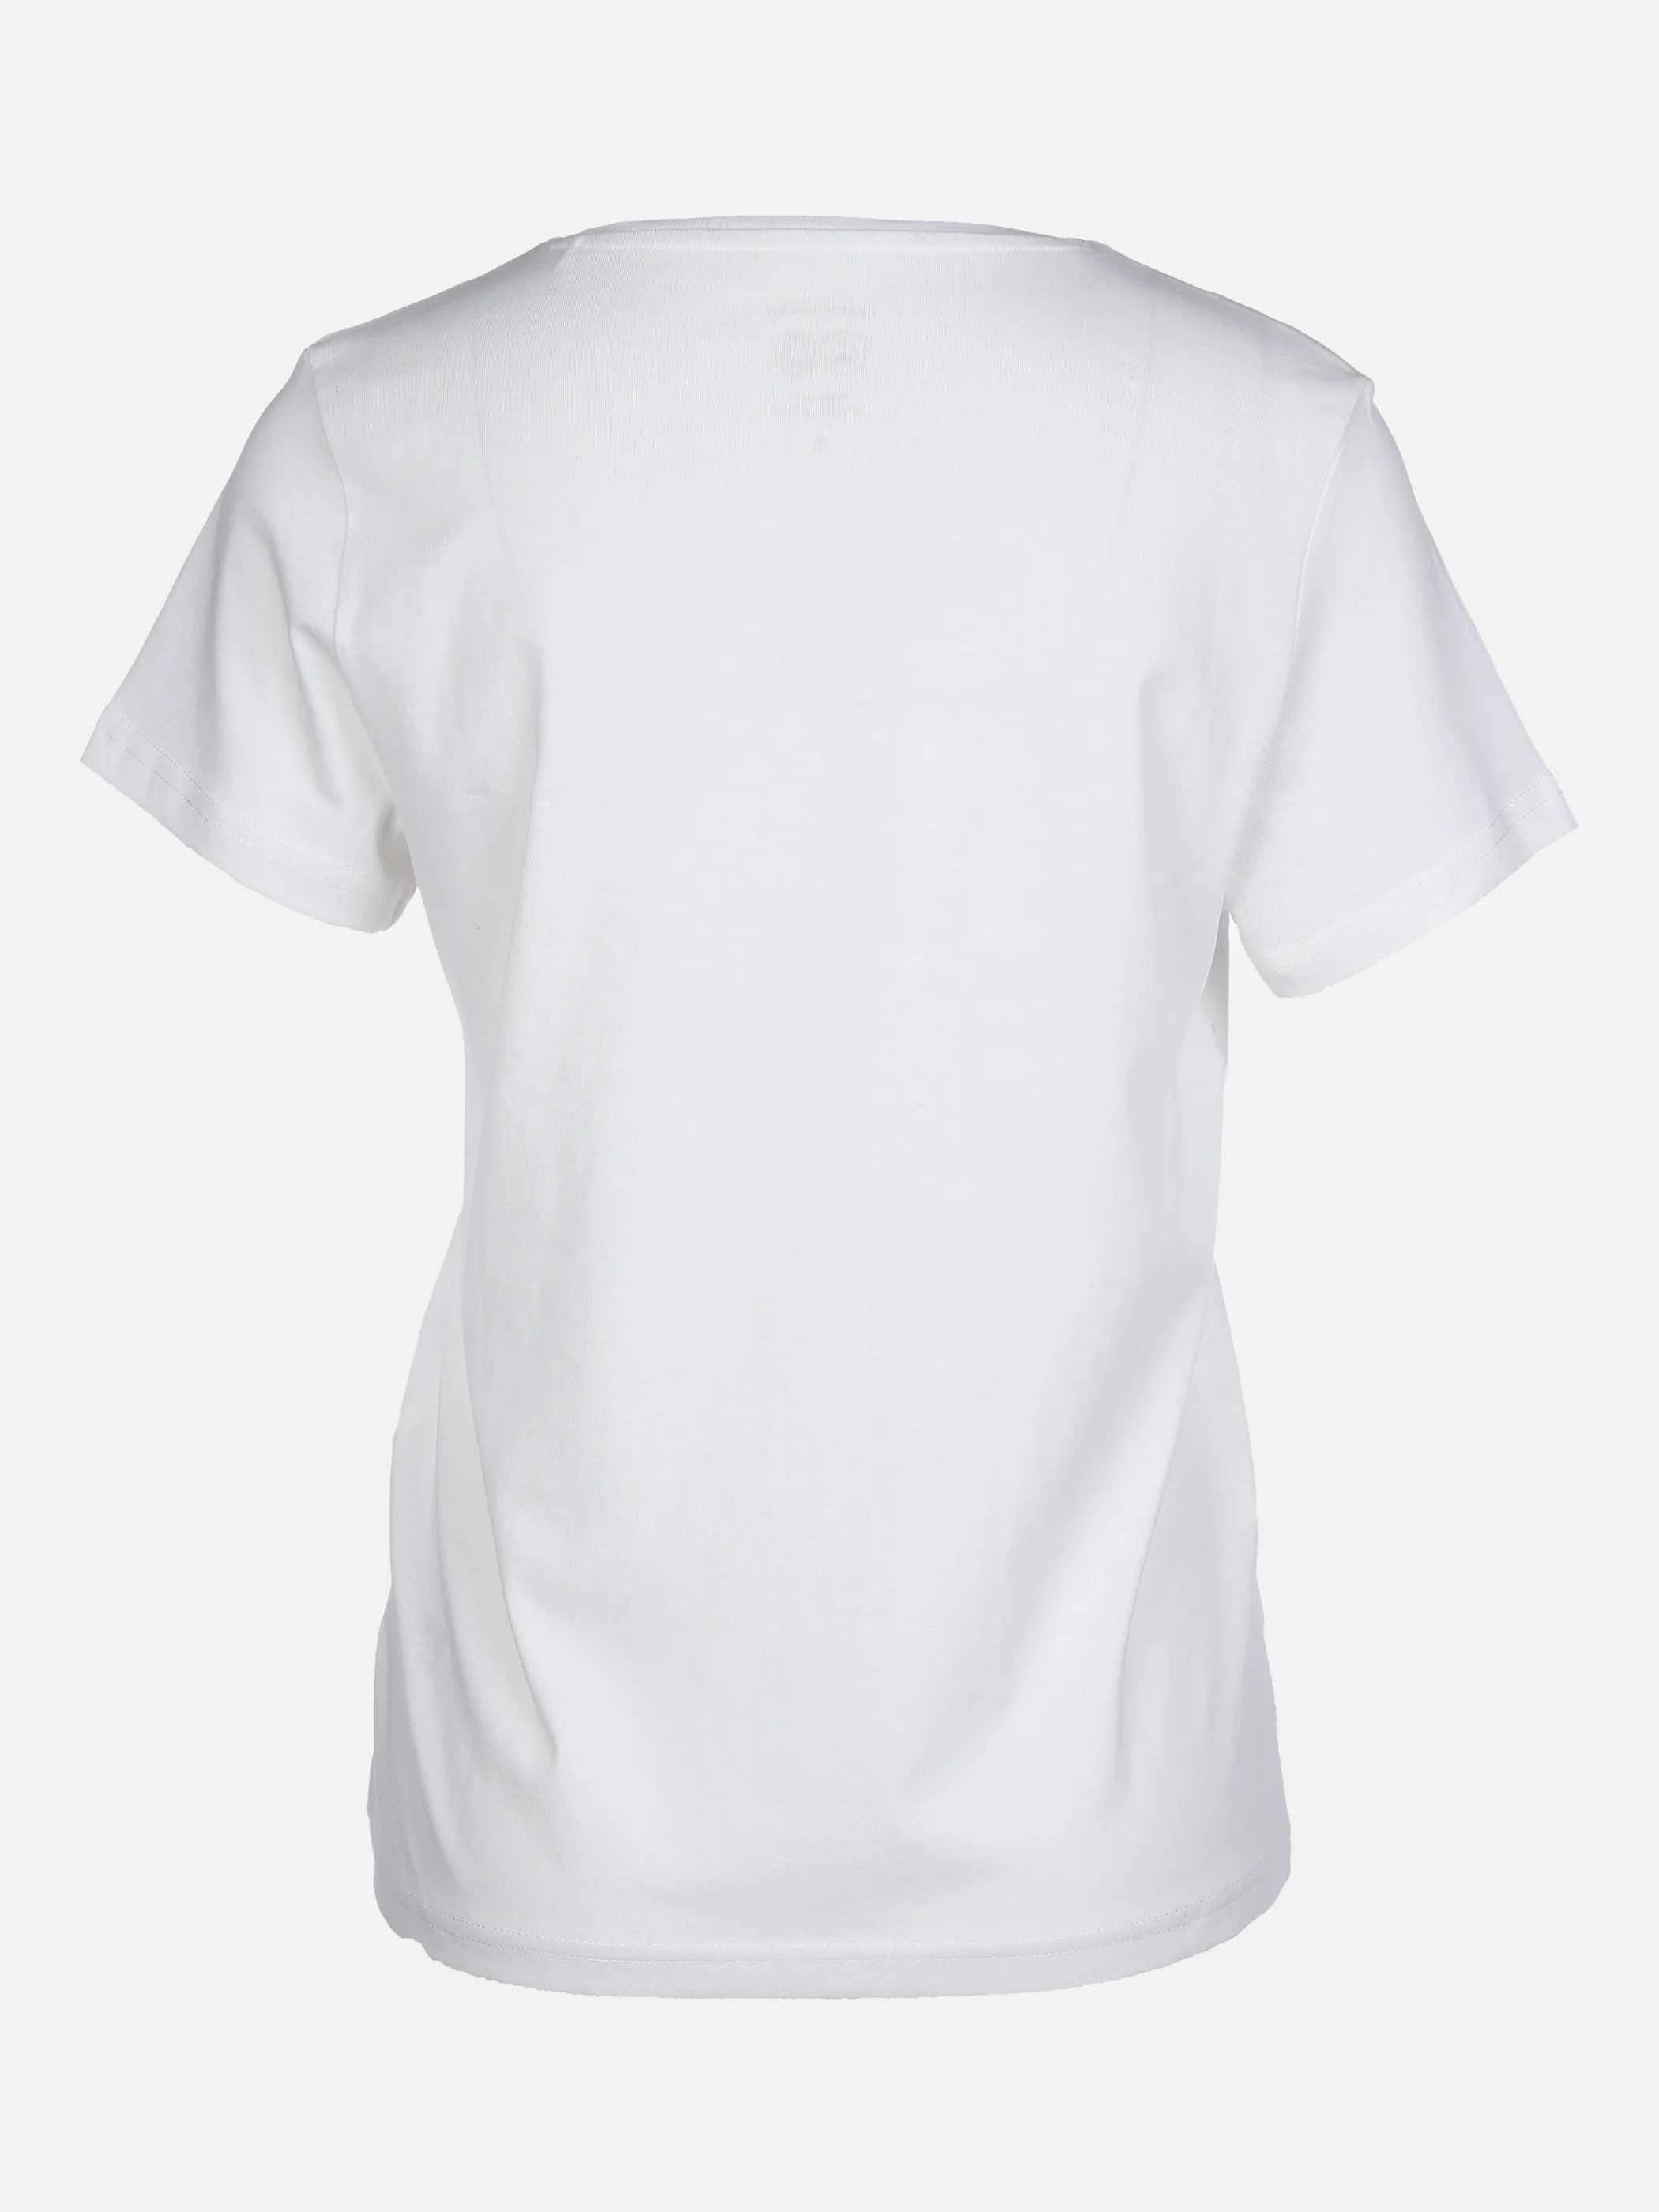 Tom Tailor 1030458 T-shirt V-neck Weiß 861066 10315 2